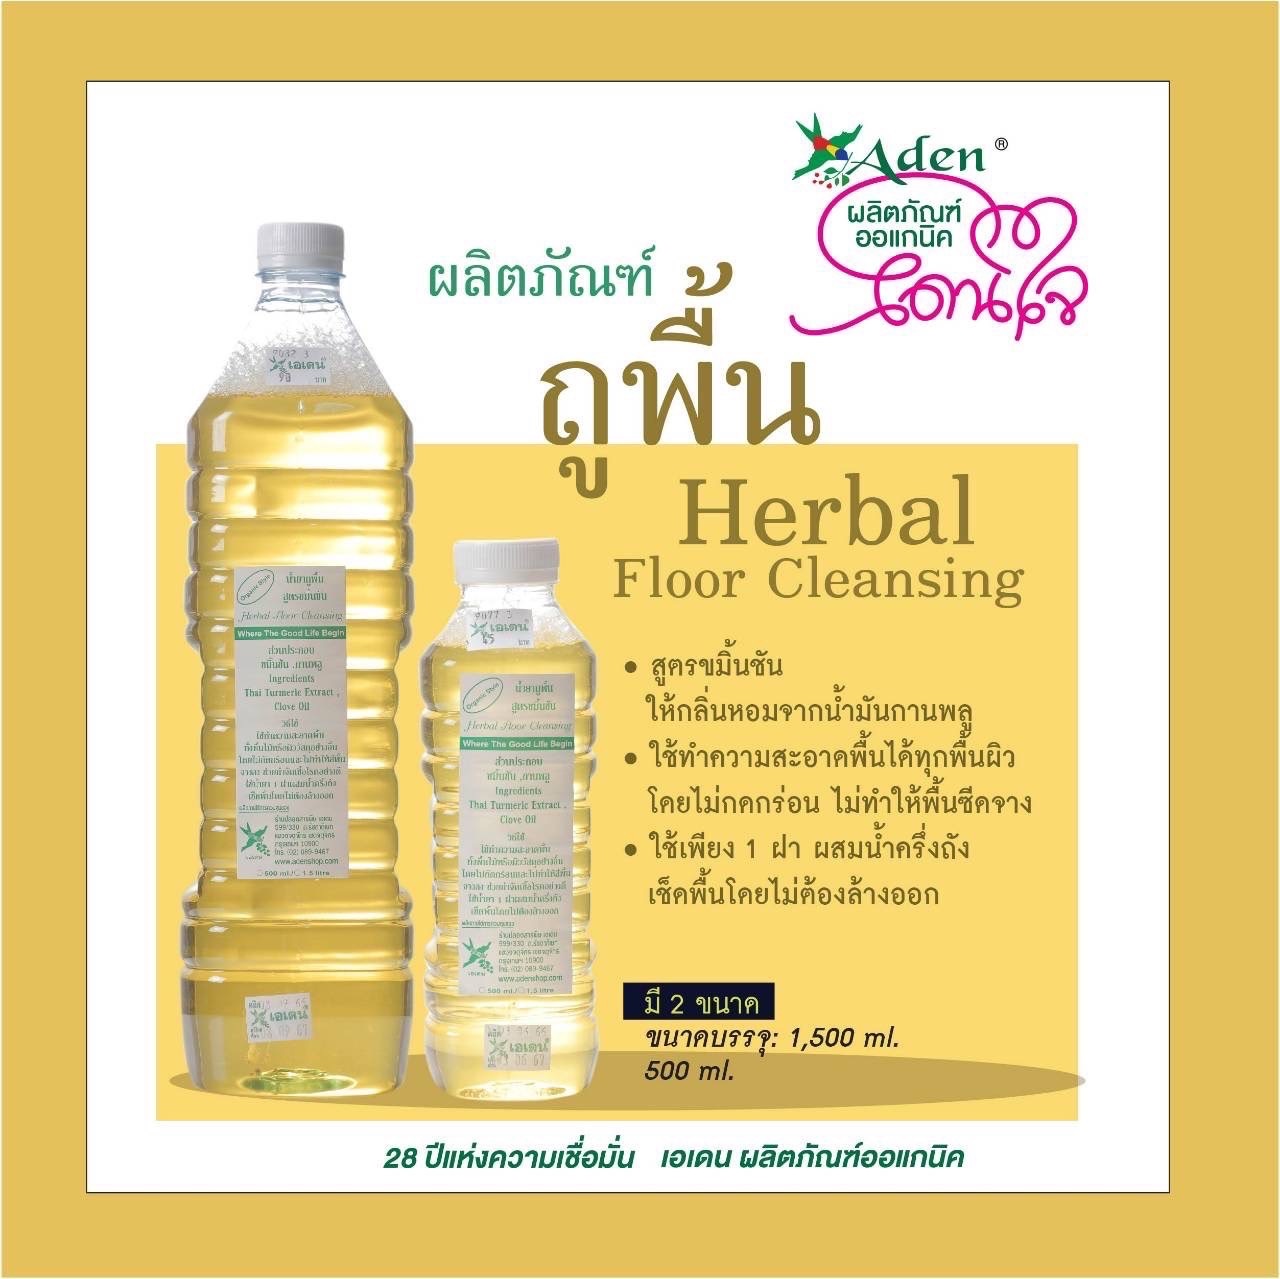 P11-0417 - : - น้ำยาถูพื้น  สูตรขมิ้นชัน ( Herbal floor cleansing-Thai turmeric extract )